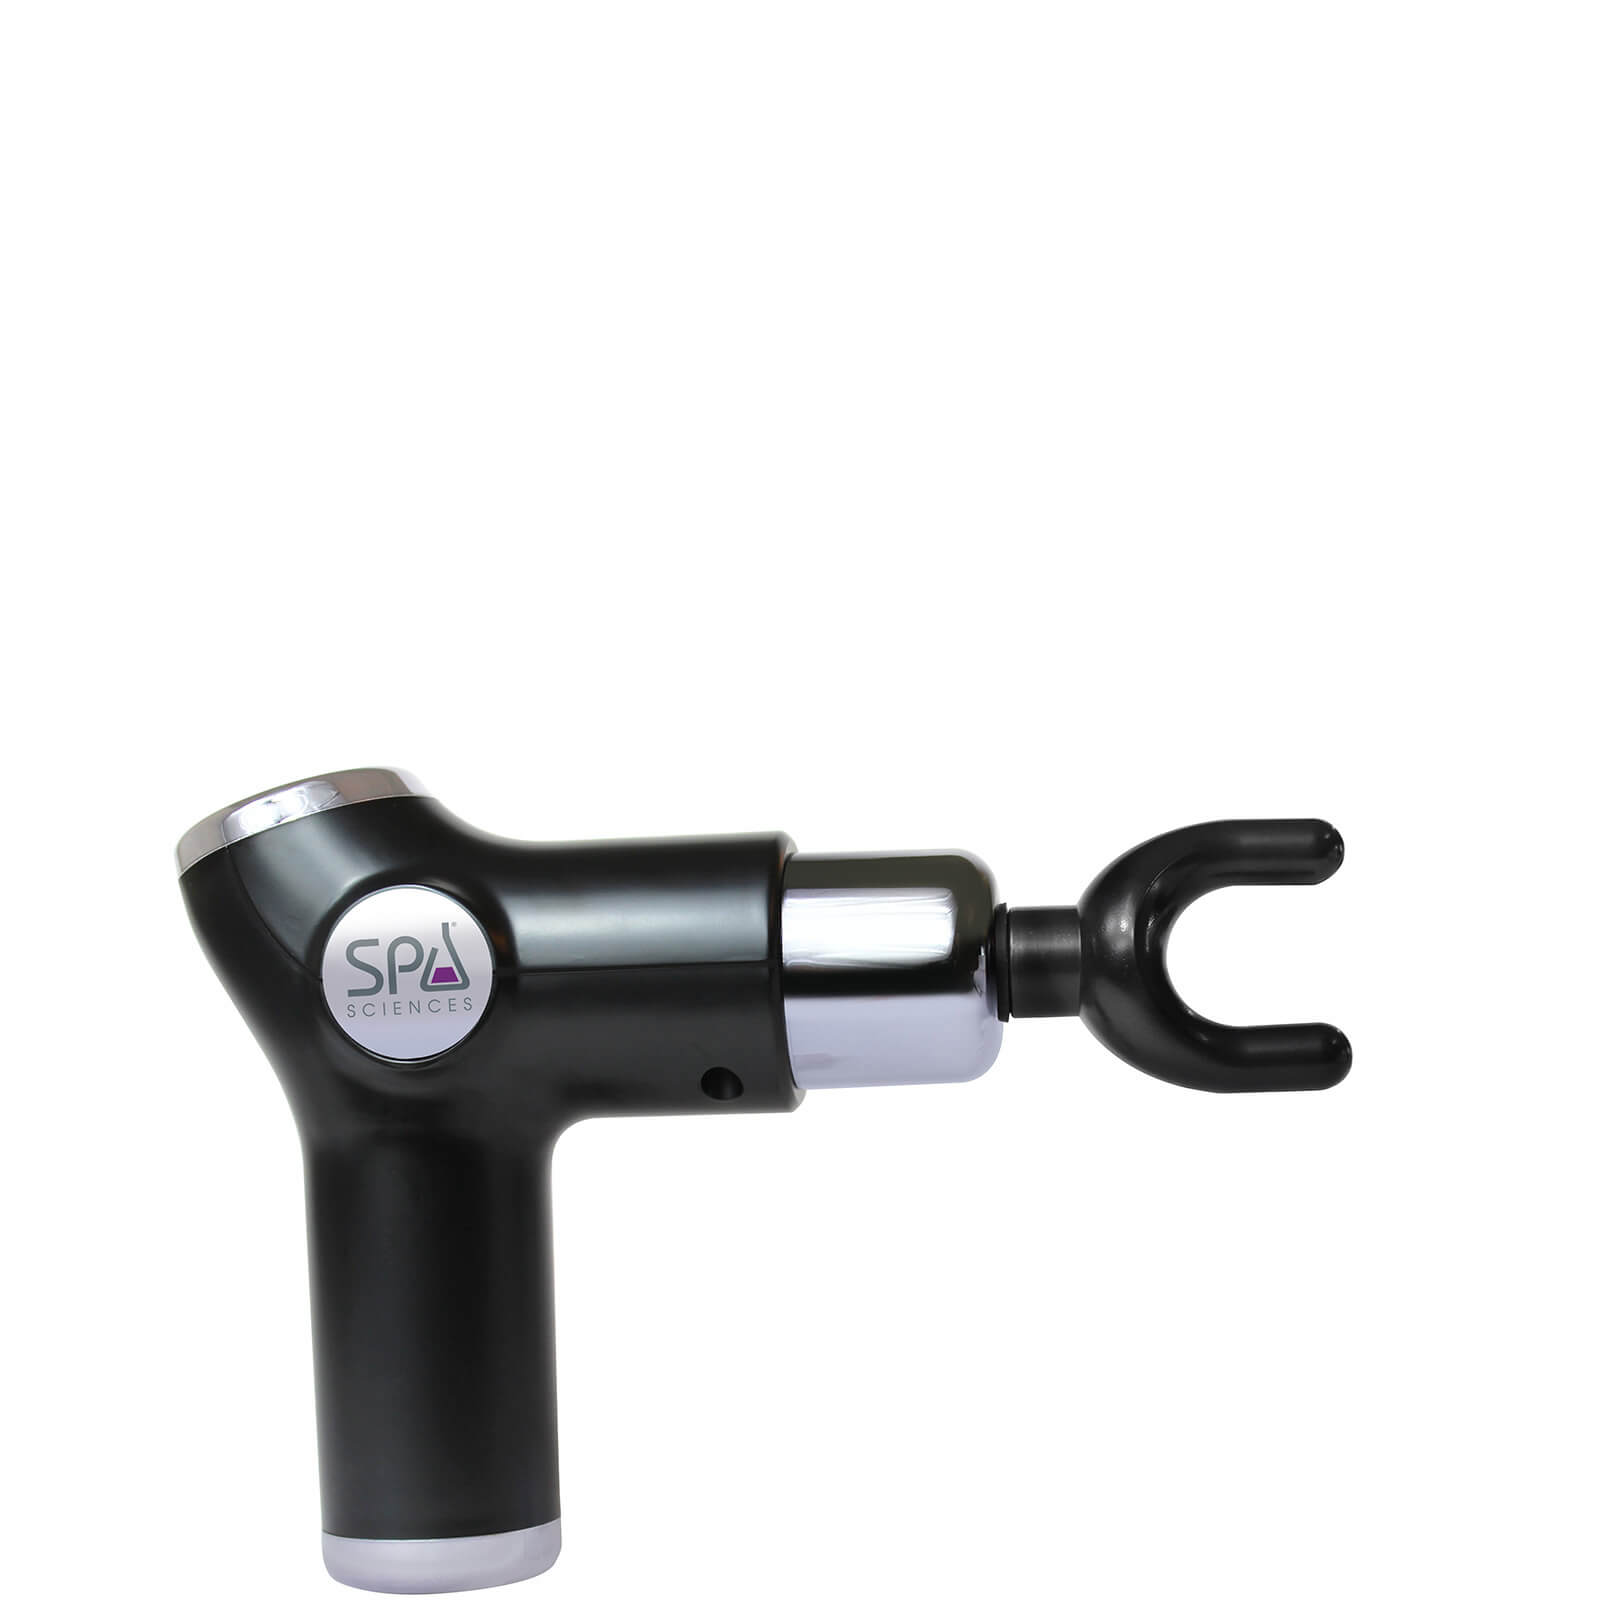 Spa Sciences FITR3 Massage Gun with 4 Head Attachments – Black lookfantastic.com imagine